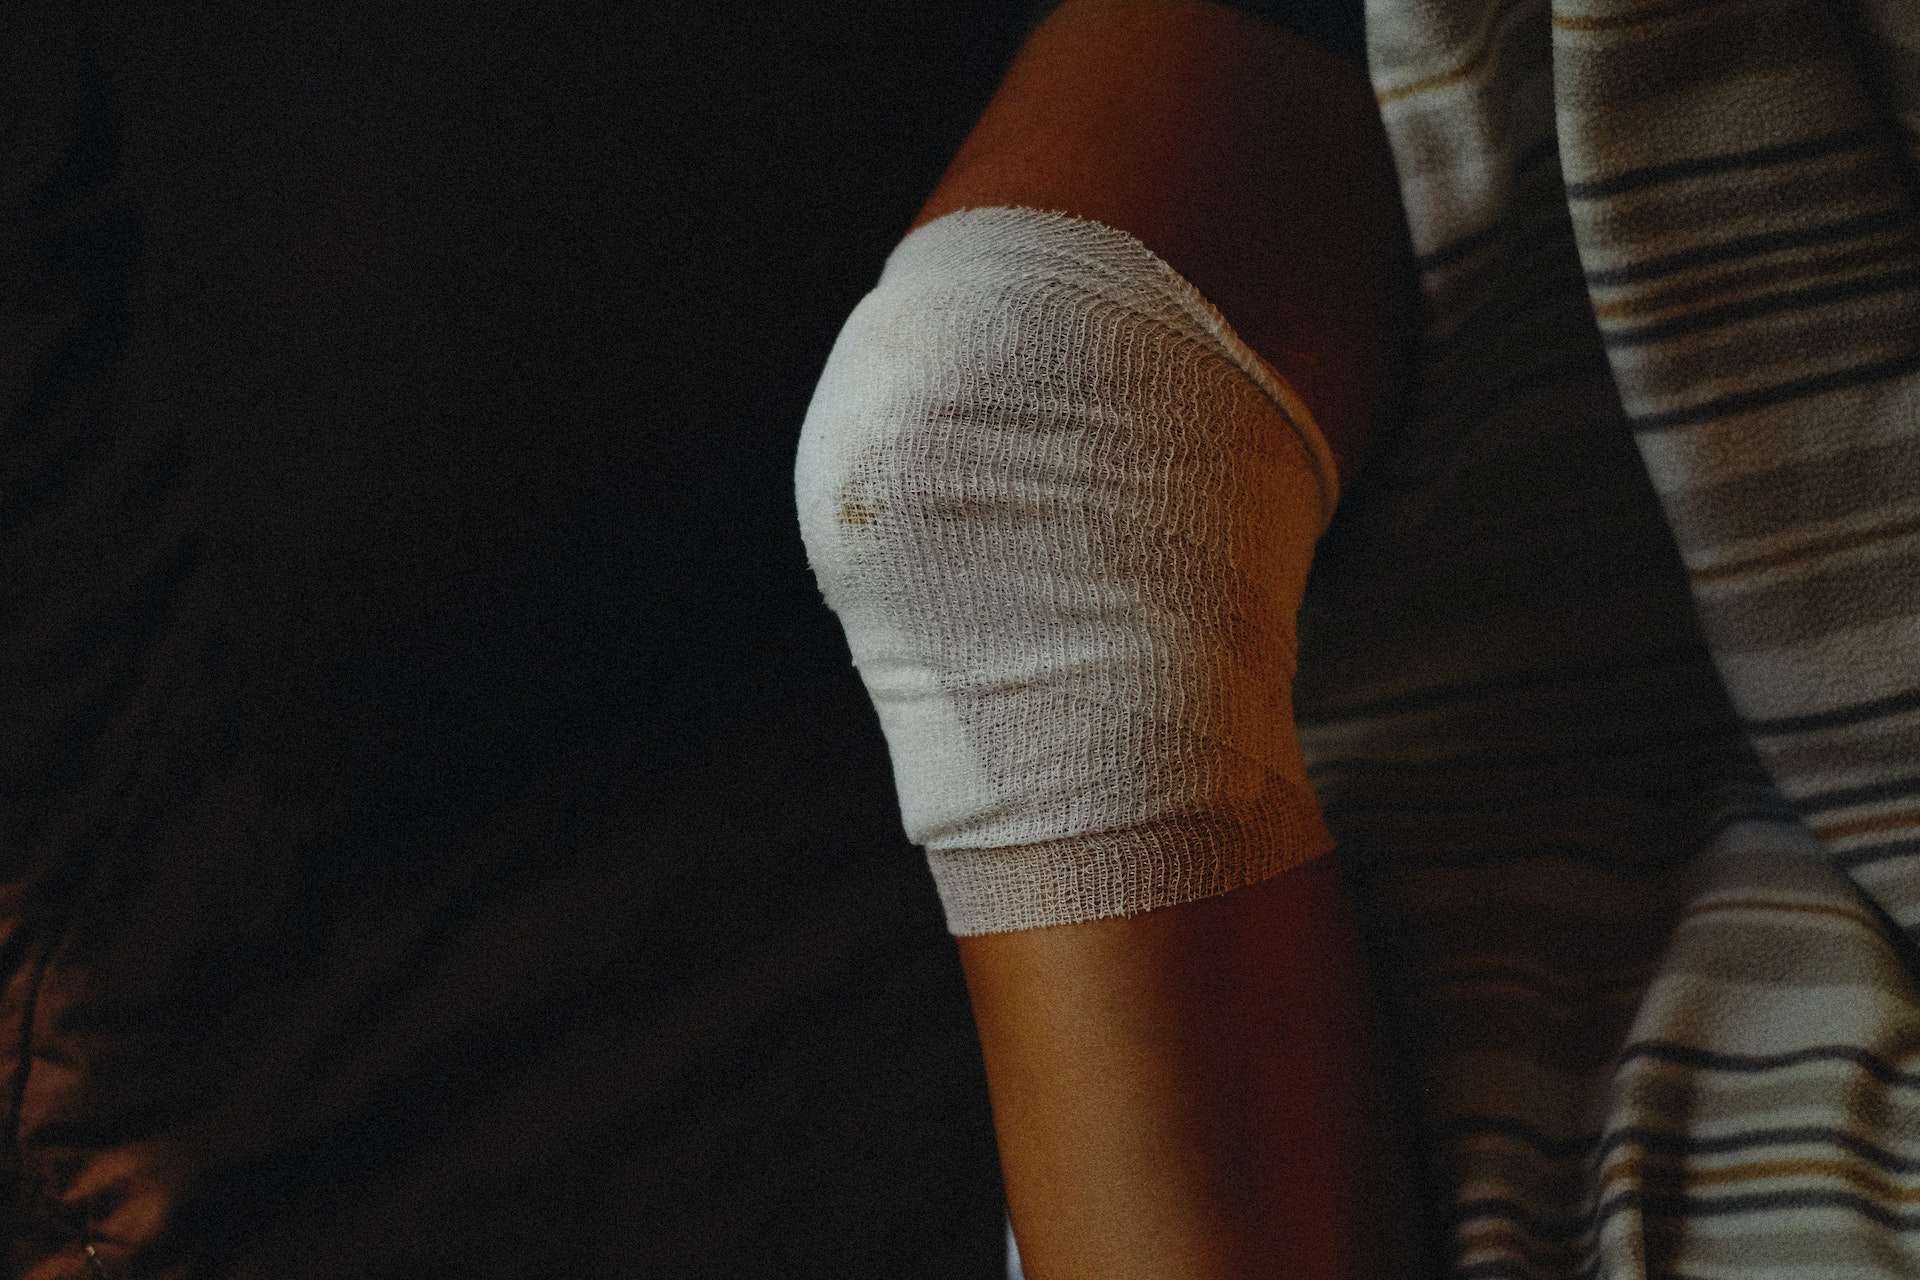 Person with Medical Gauze Bandage on Injured Knee
